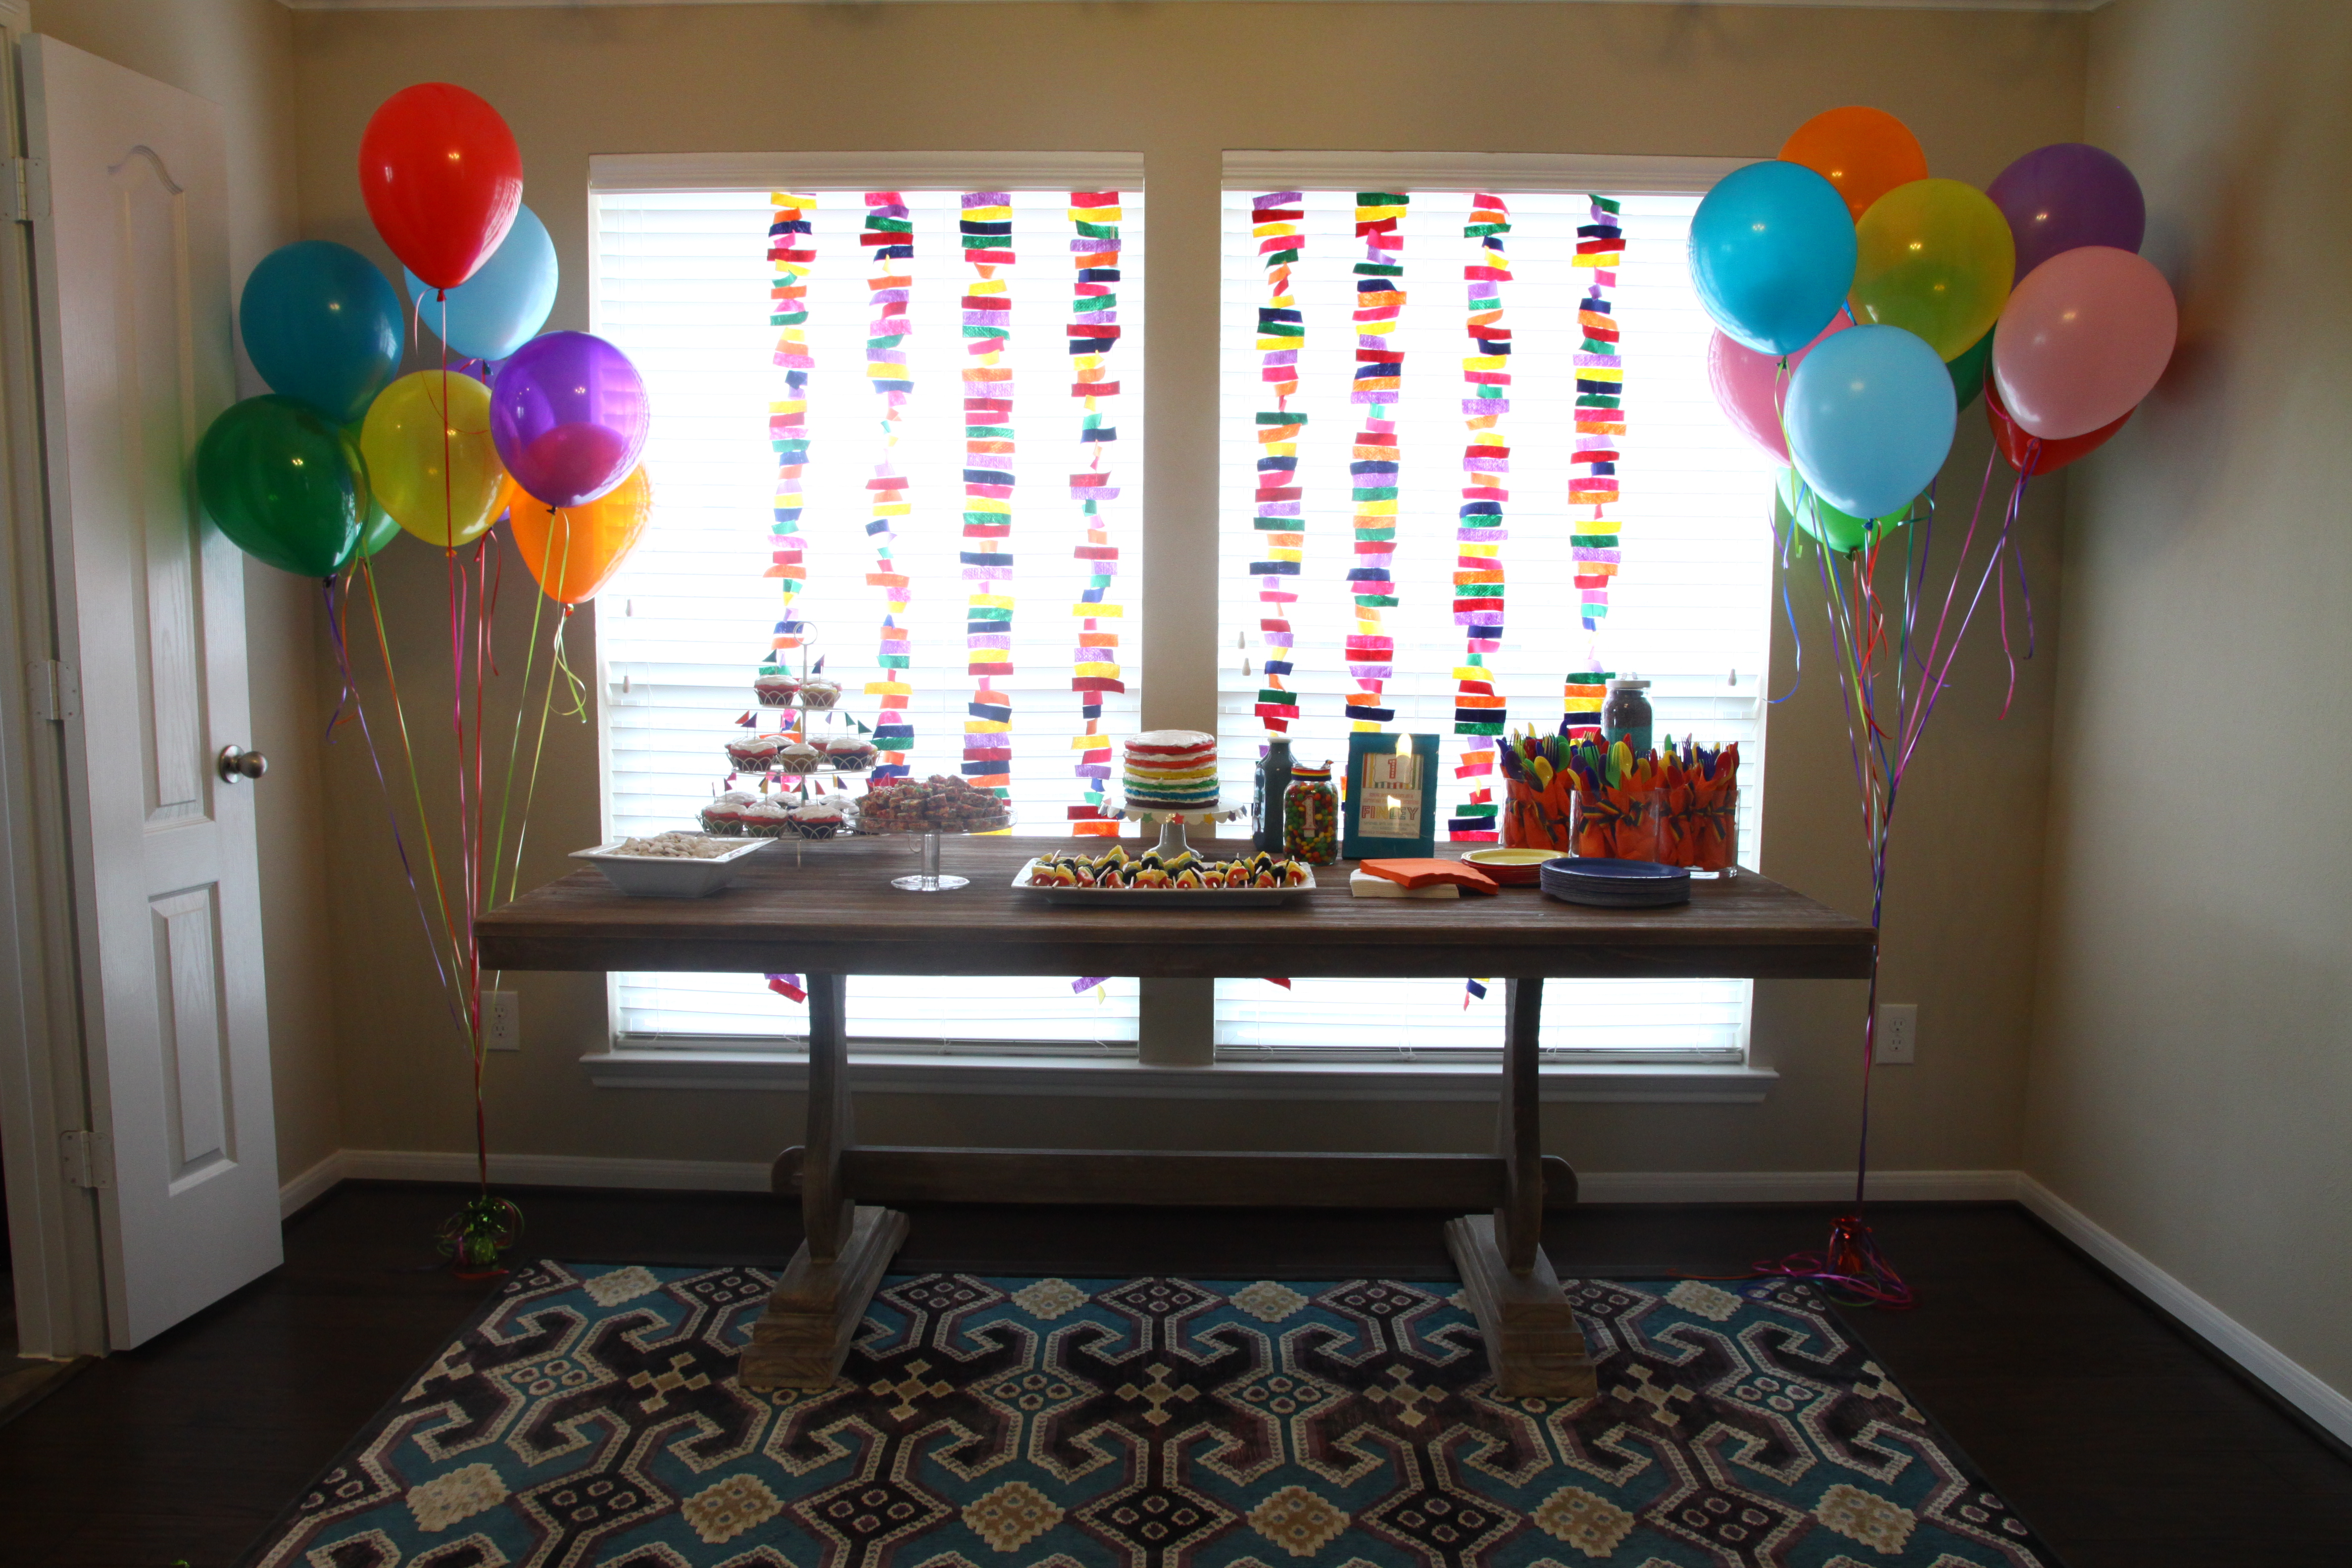 Mila's Rainbow Party - Project Nursery